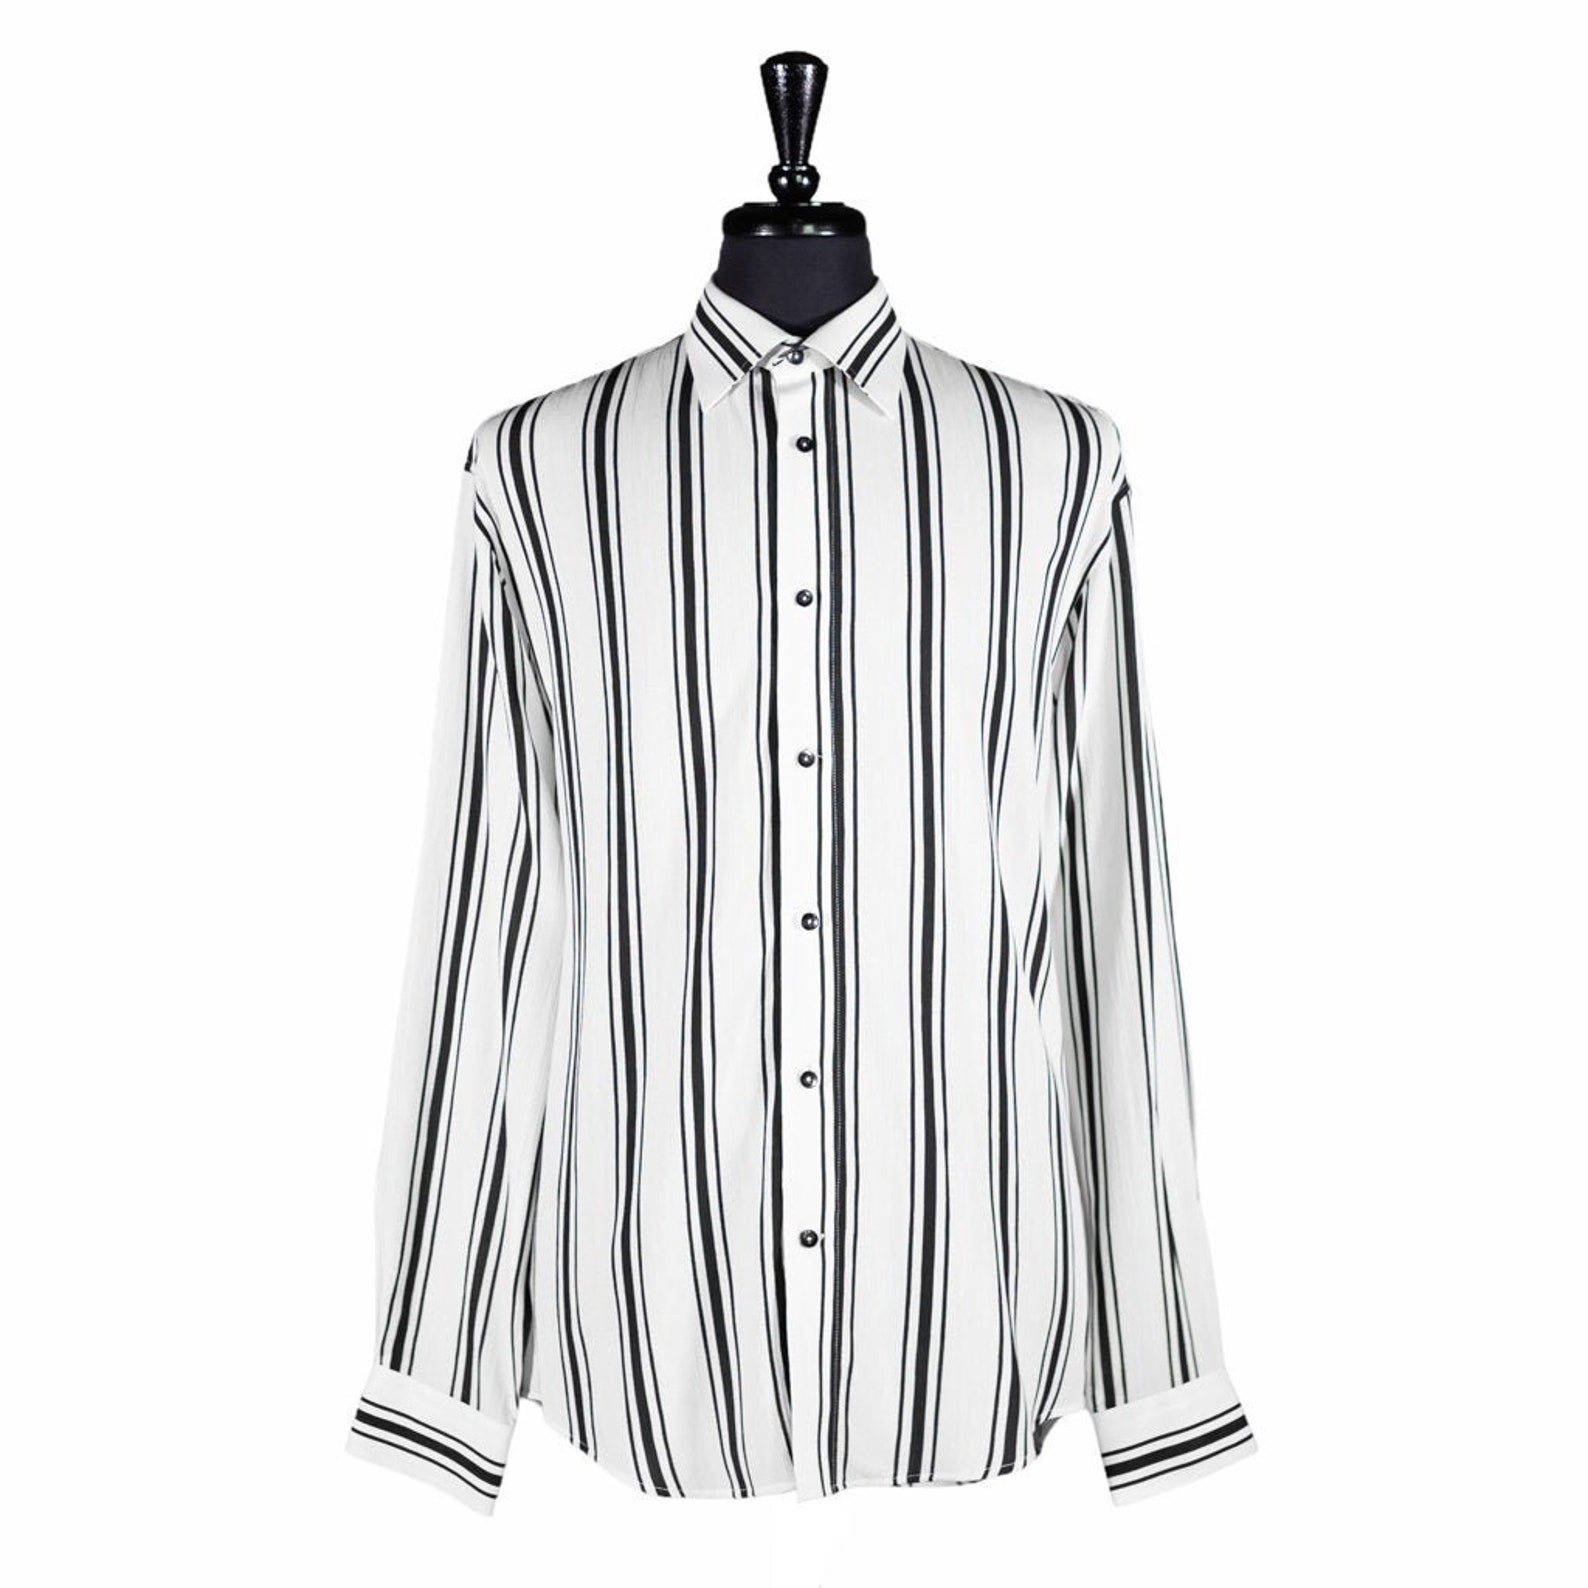 Men's Button Up Shirt White Black Striped Linen Long | Etsy